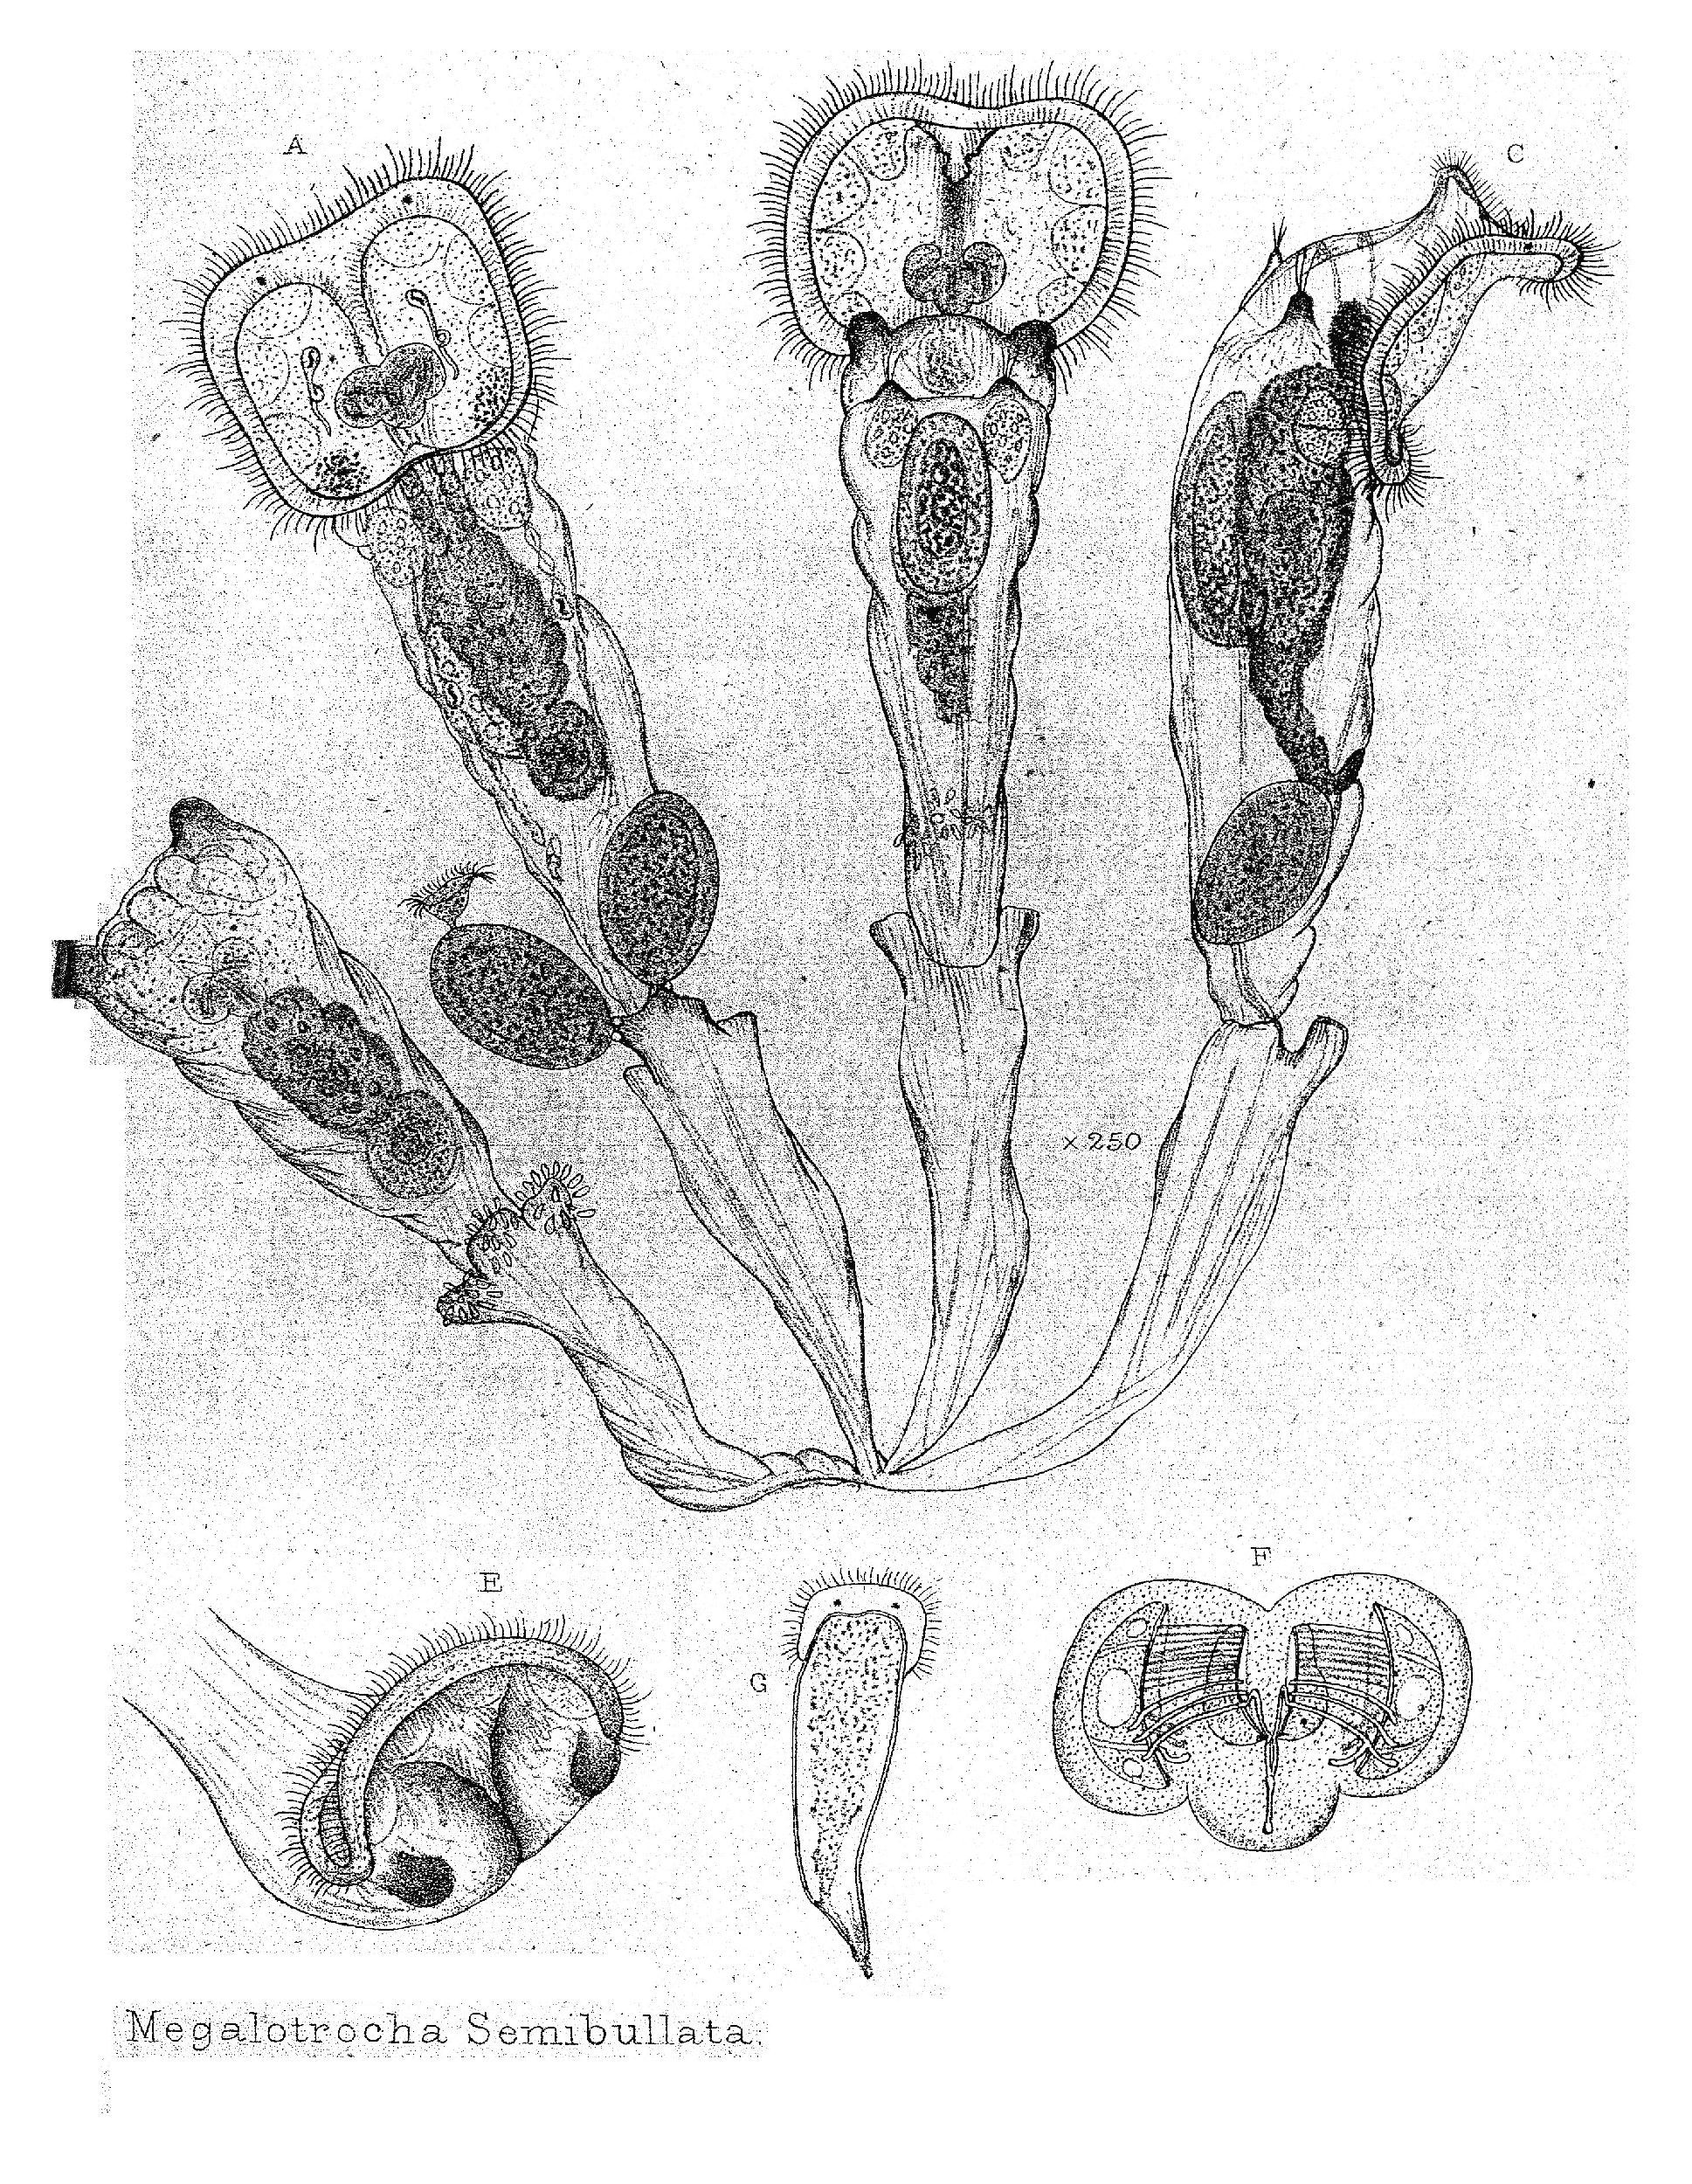 Image de Sinantherina semibullata (Thorpe 1889)